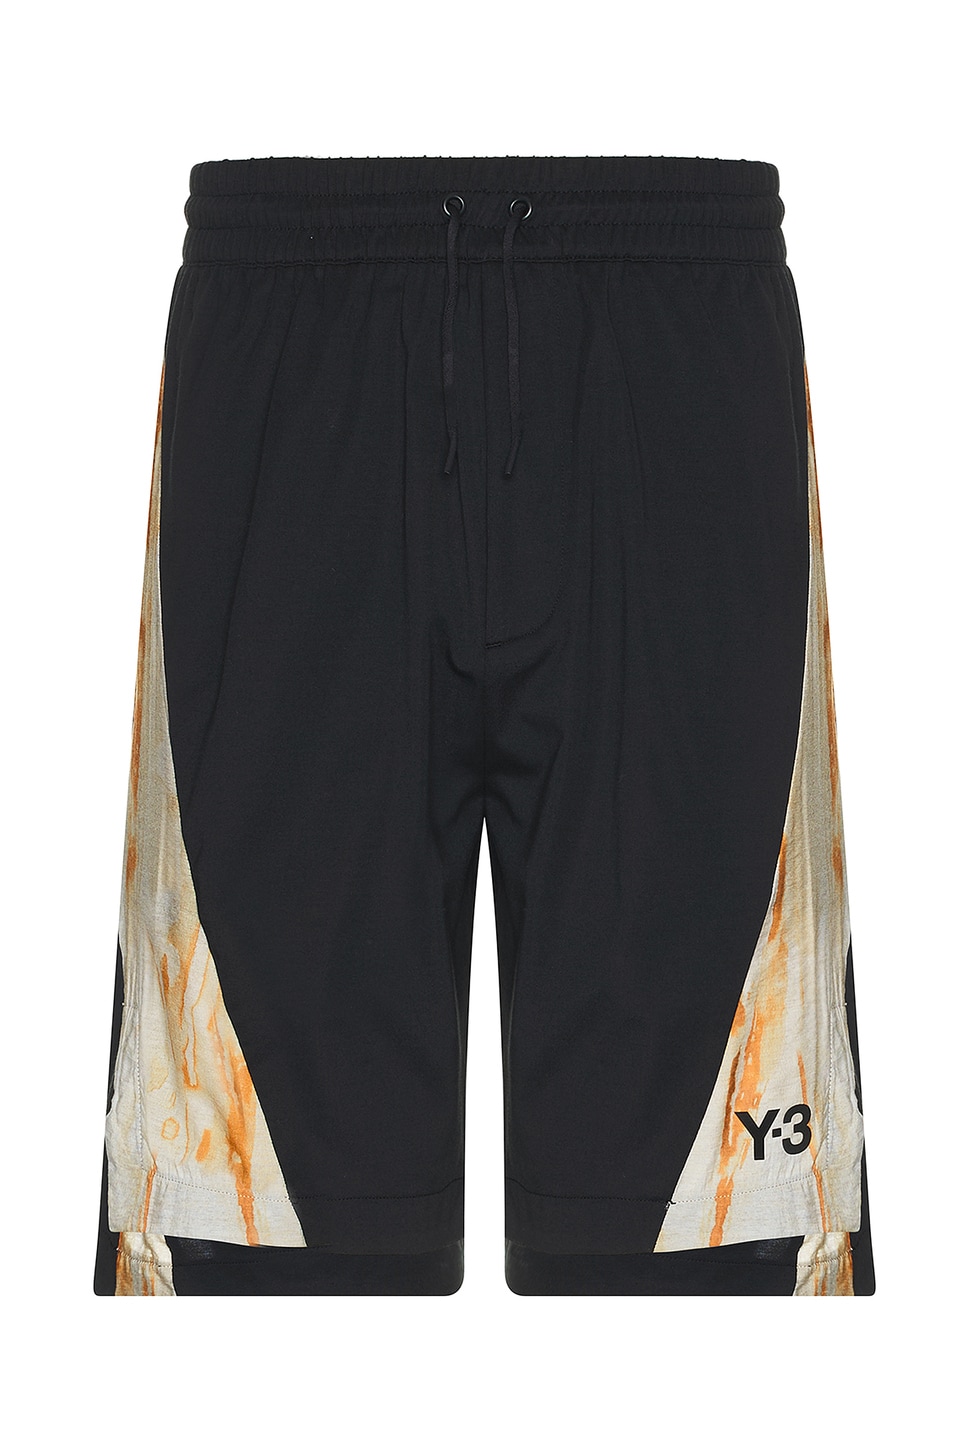 Image 1 of Y-3 Yohji Yamamoto Rust Dye Shorts in Black & Camo